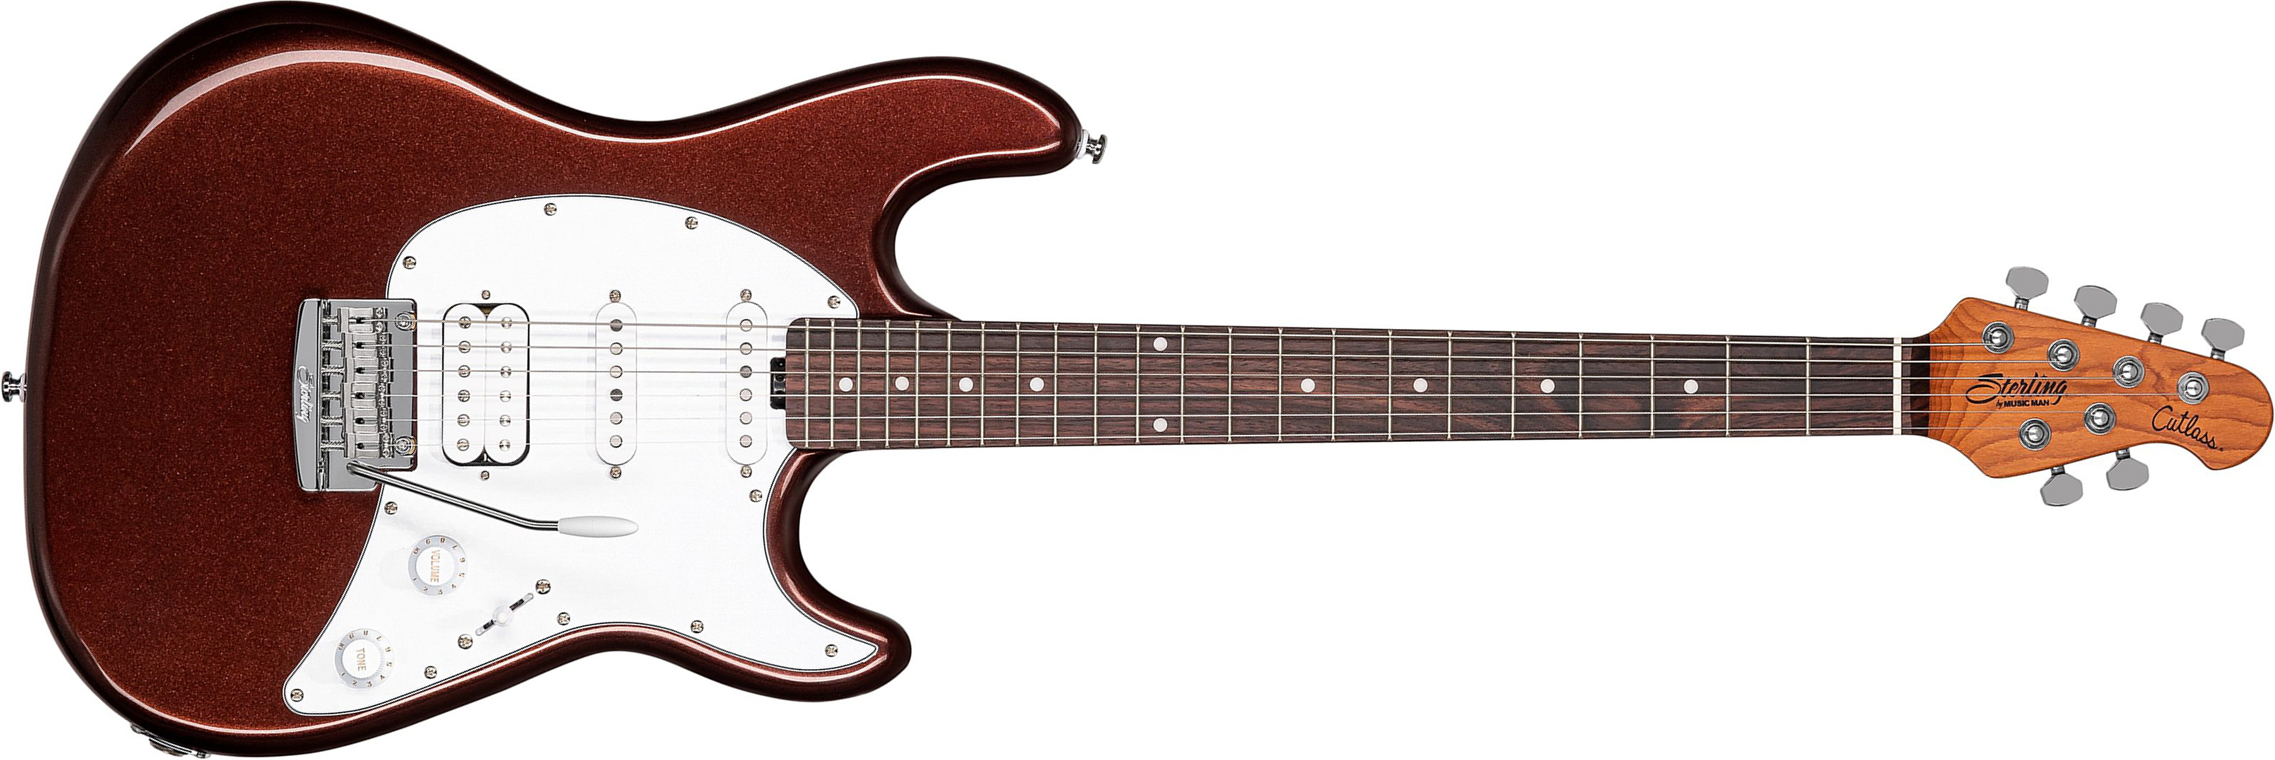 Sterling By Musicman Cutlass Ct50hss Trem Rw - Dropped Copper - E-Gitarre in Str-Form - Main picture